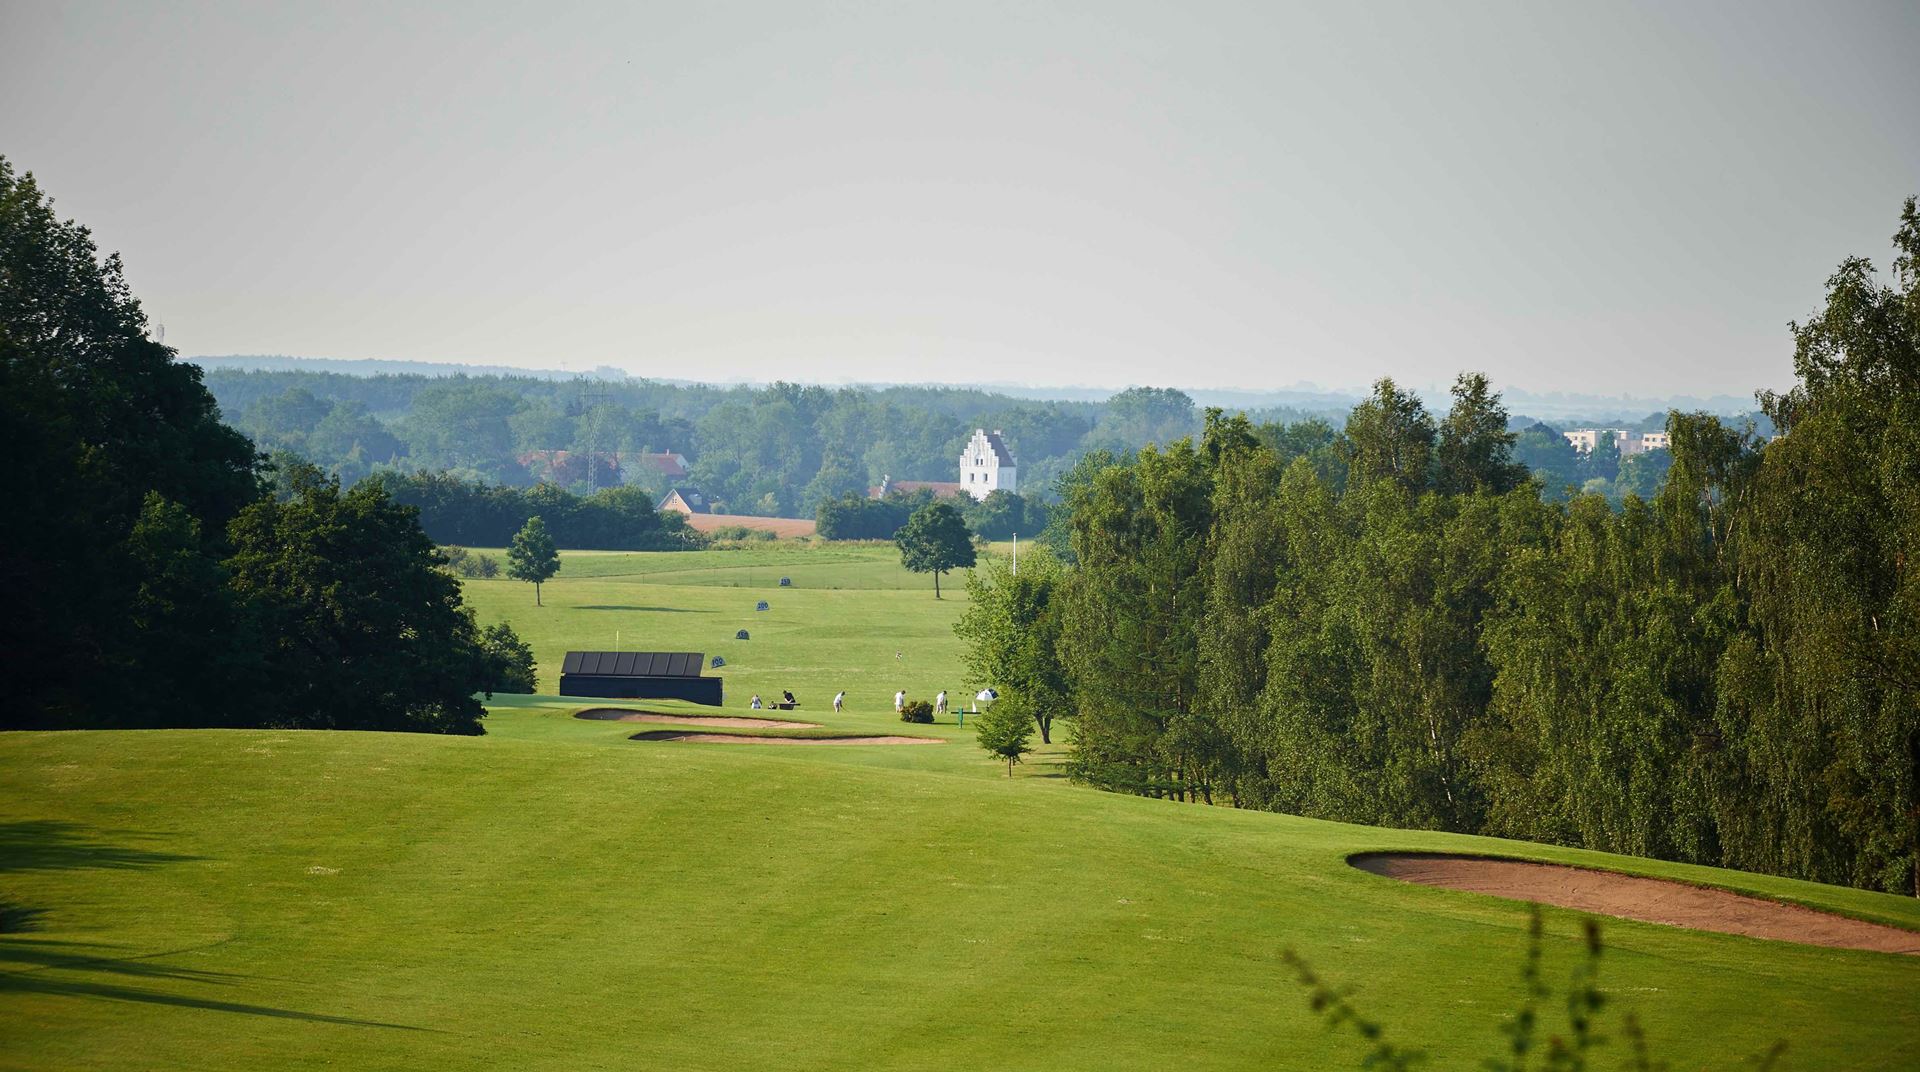 anker specielt Berygtet Svendborg Golf Klub | Golfbane Fyn | NordicGolfers.com